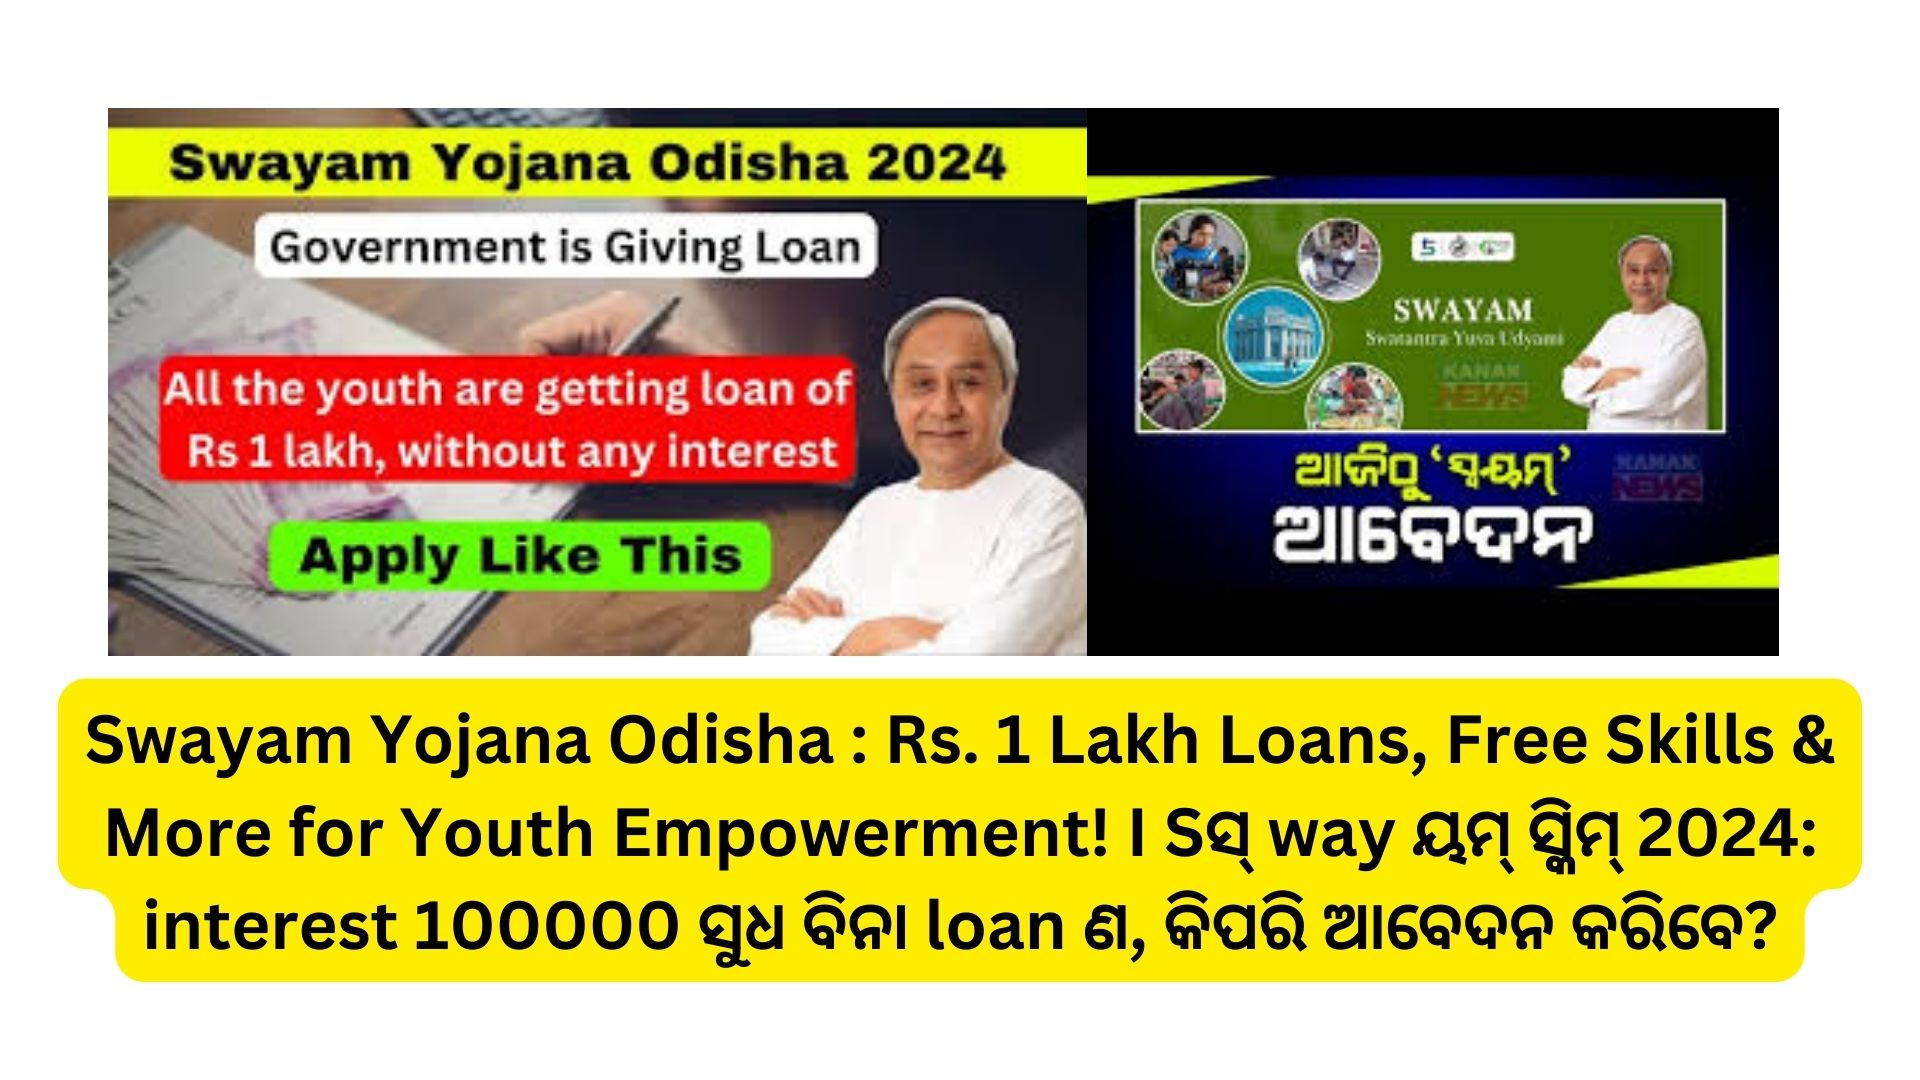 Swayam Yojana Odisha : Rs. 1 Lakh Loans, Free Skills & More for Youth Empowerment! I Sସ୍ way ୟମ୍ ସ୍କିମ୍ 2024: interest 100000 ସୁଧ ବିନା loan ଣ, କିପରି ଆବେଦନ କରିବେ?